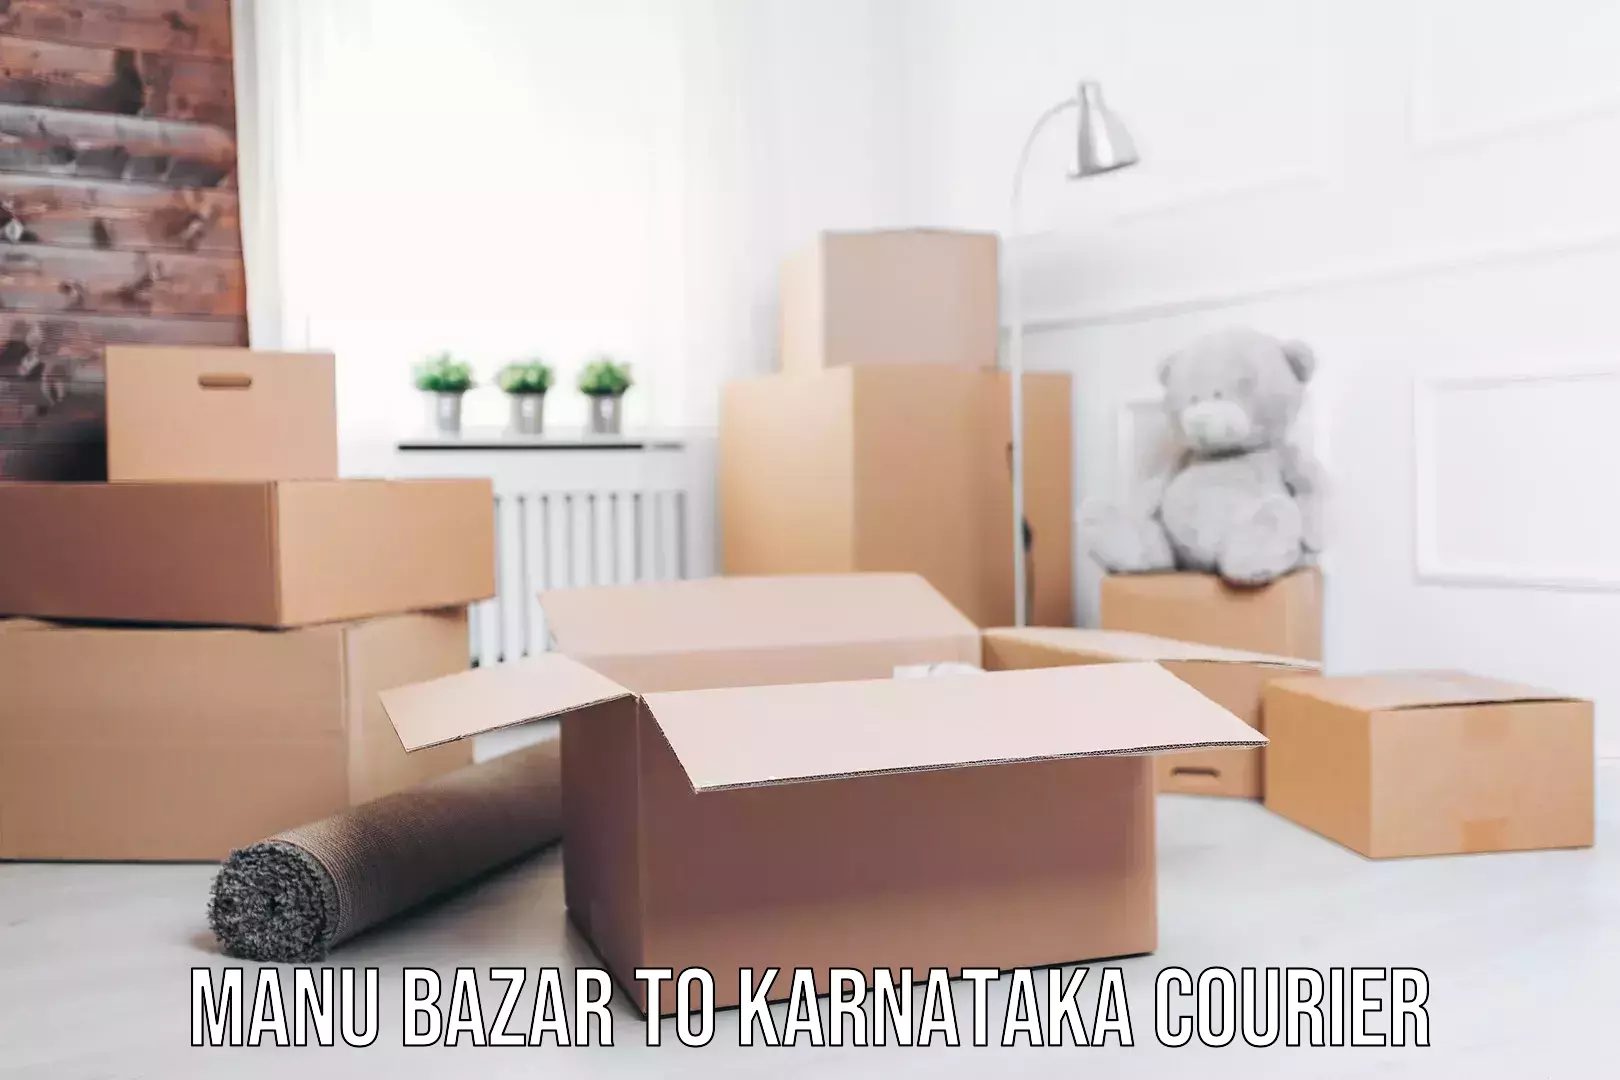 Business delivery service Manu Bazar to Karnataka